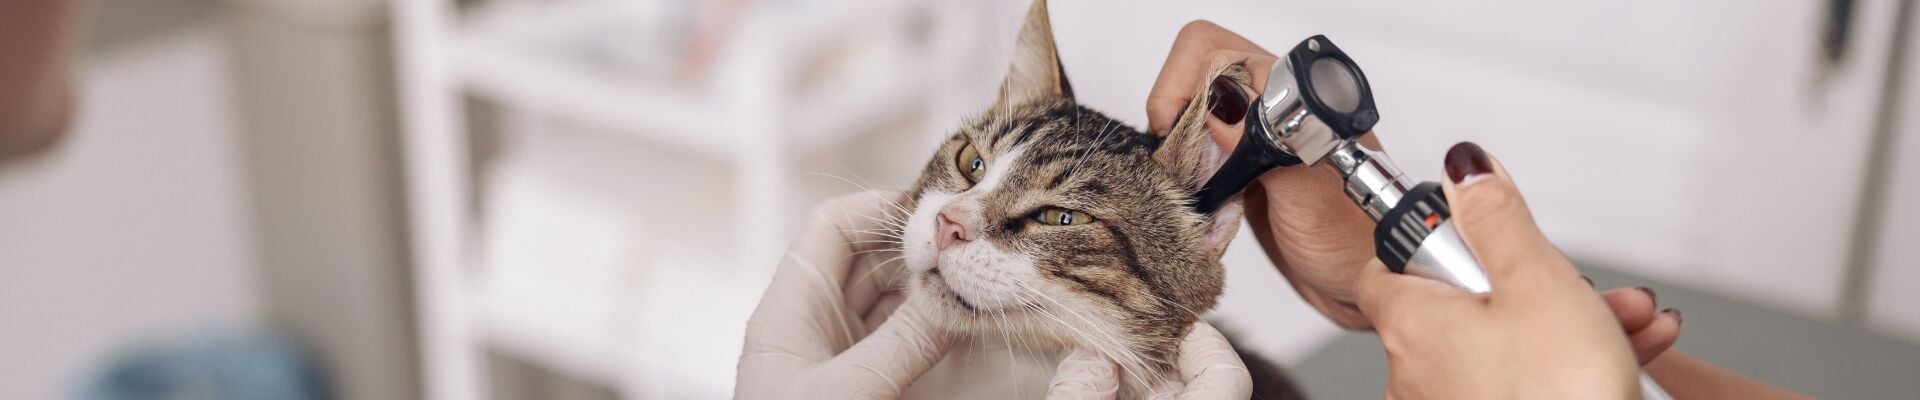 A vet examining a cat's ears